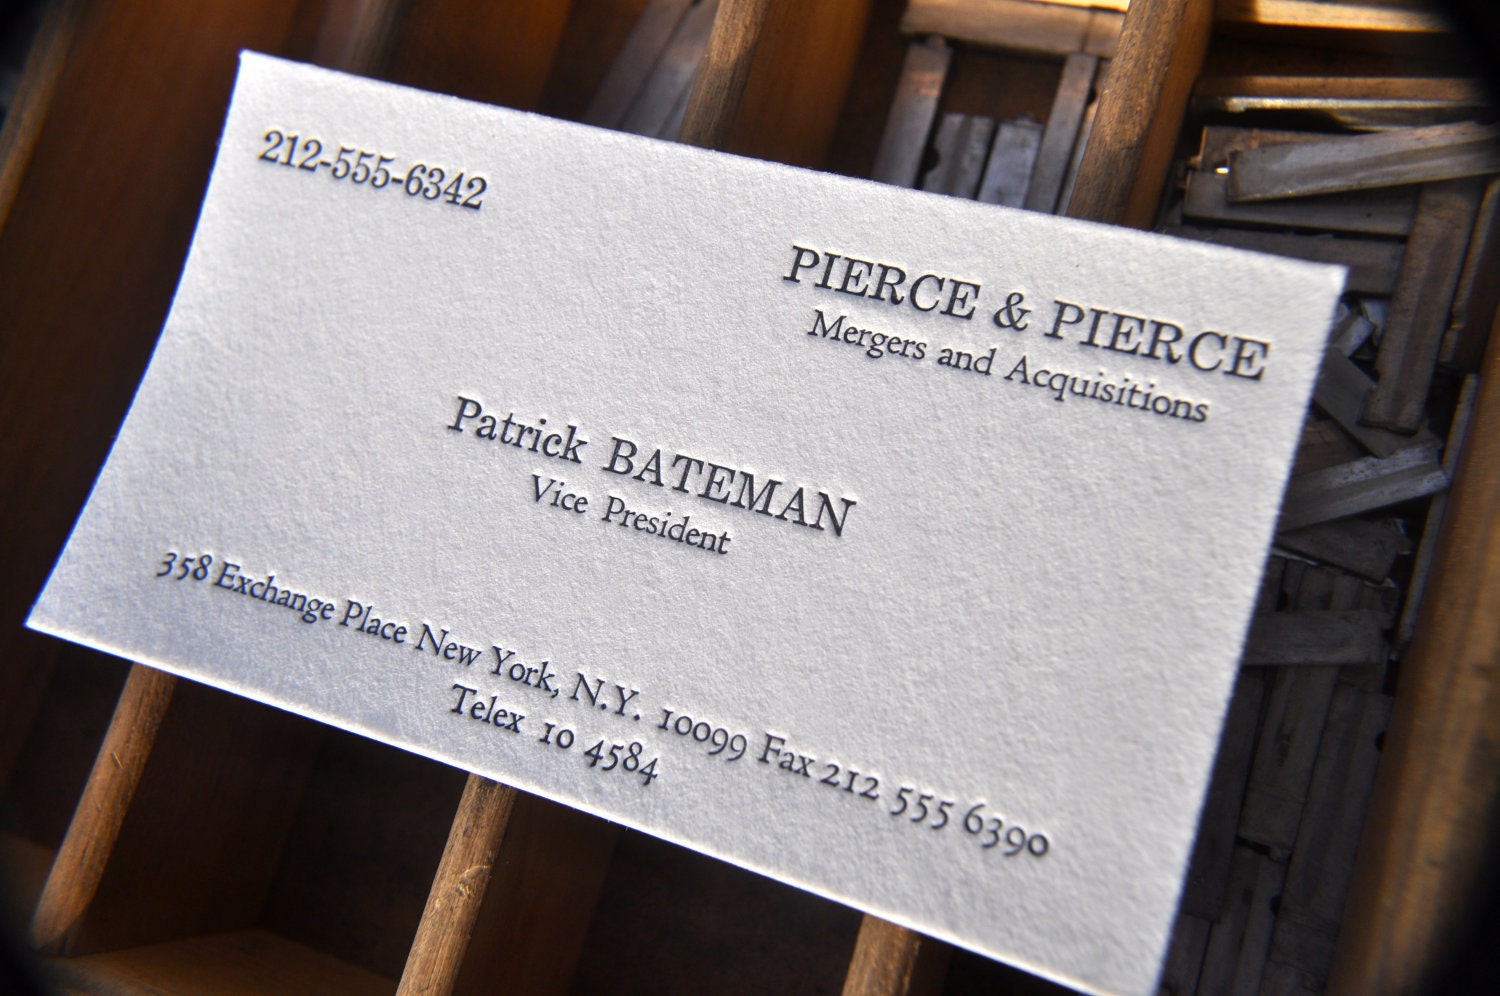 New 70 Patrick Bateman Business Card